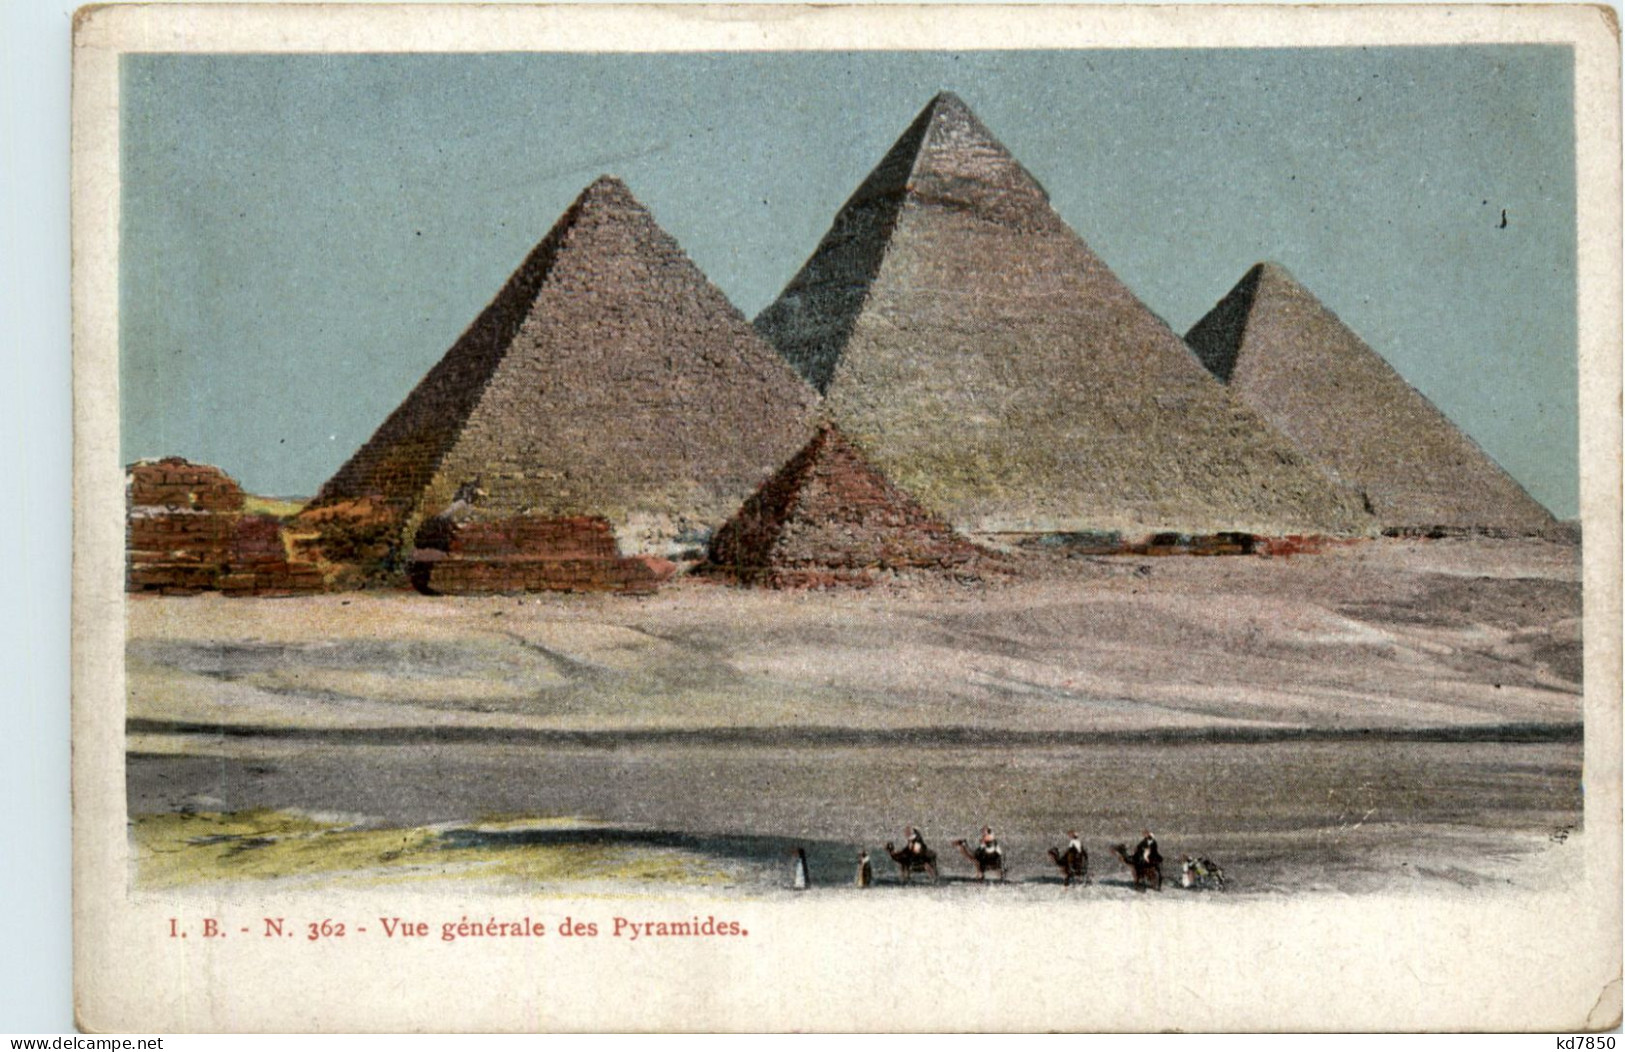 Pyramides - Pyramids